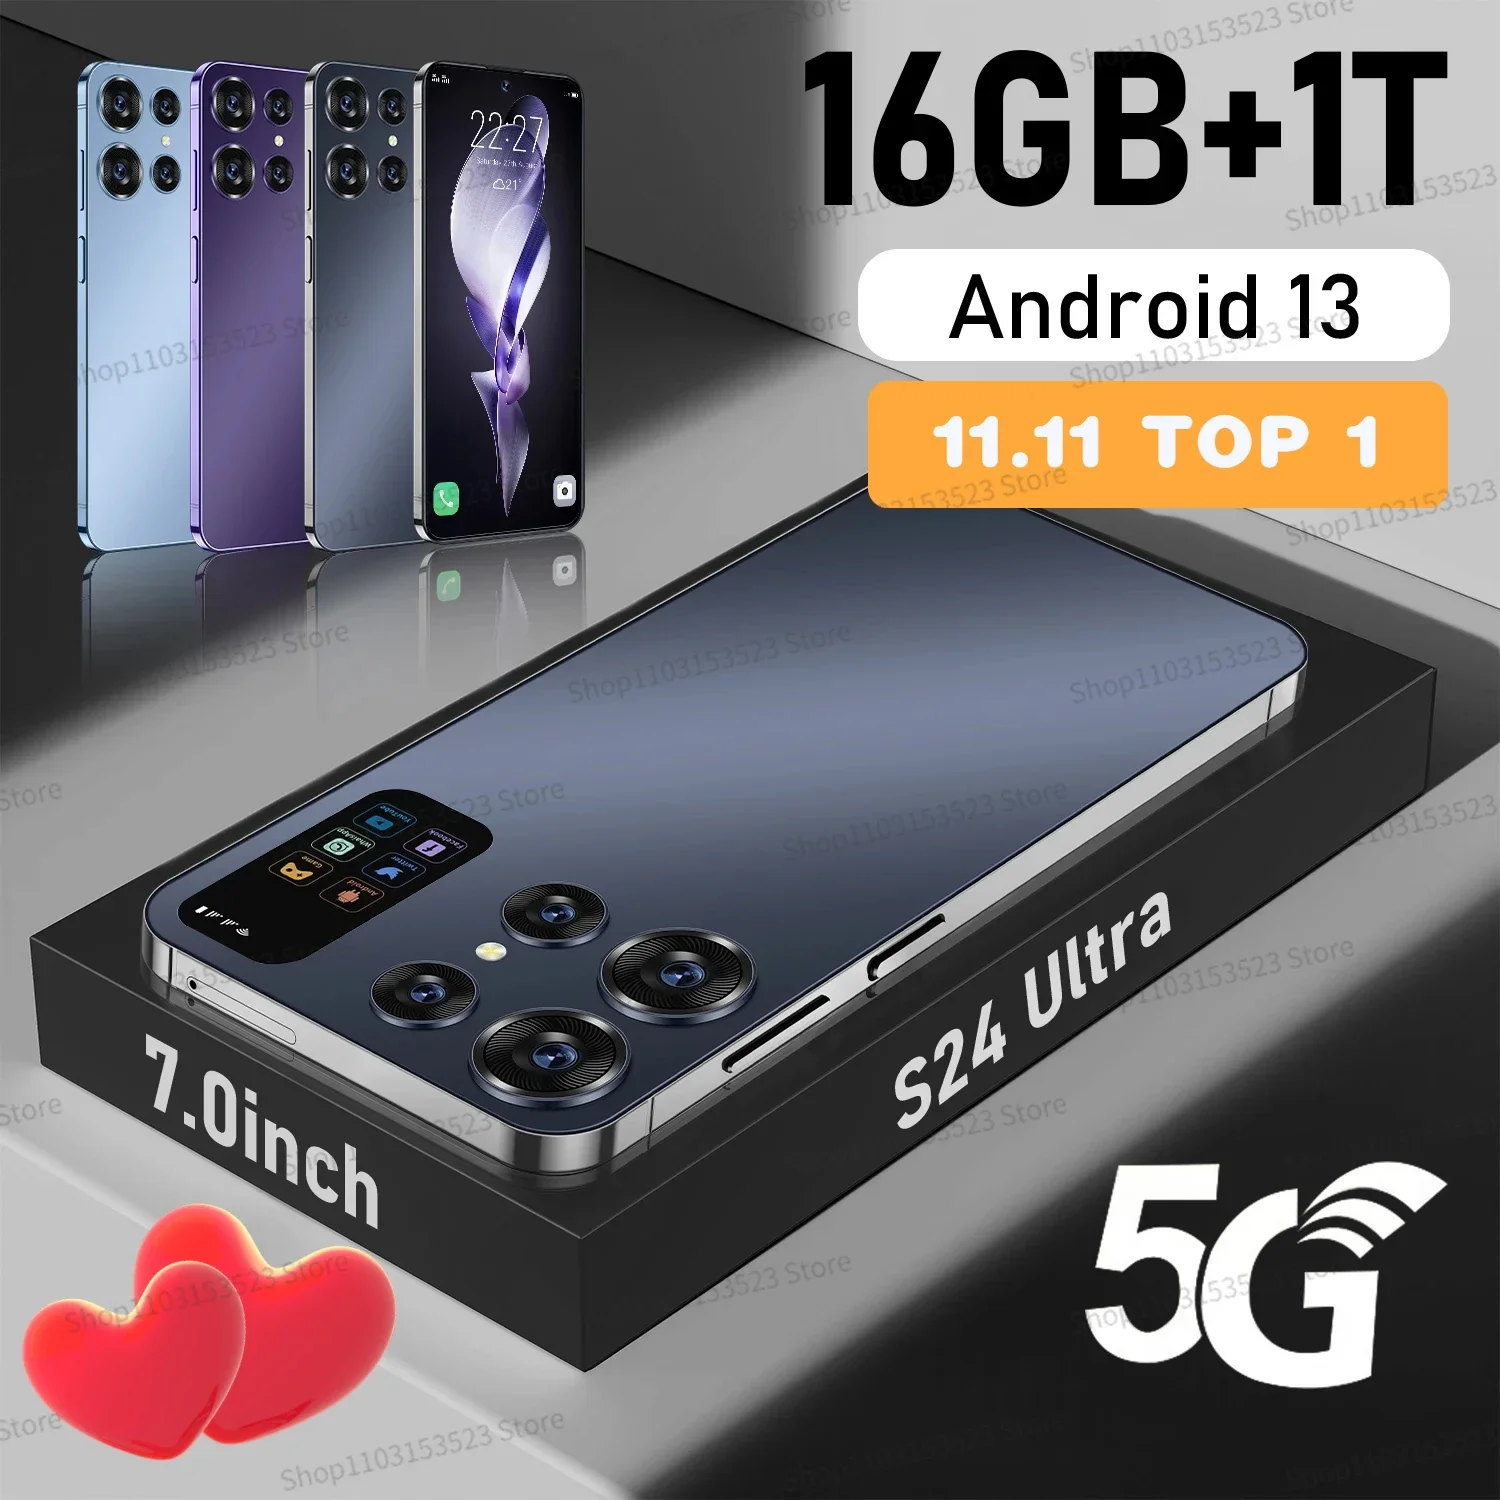 

Брендовый Global s24 s23 ультра смартфон 7.0HD экран 16G + 1T 7000 мАч Android 13 Celulare две Sim-карты разблокированный телефон